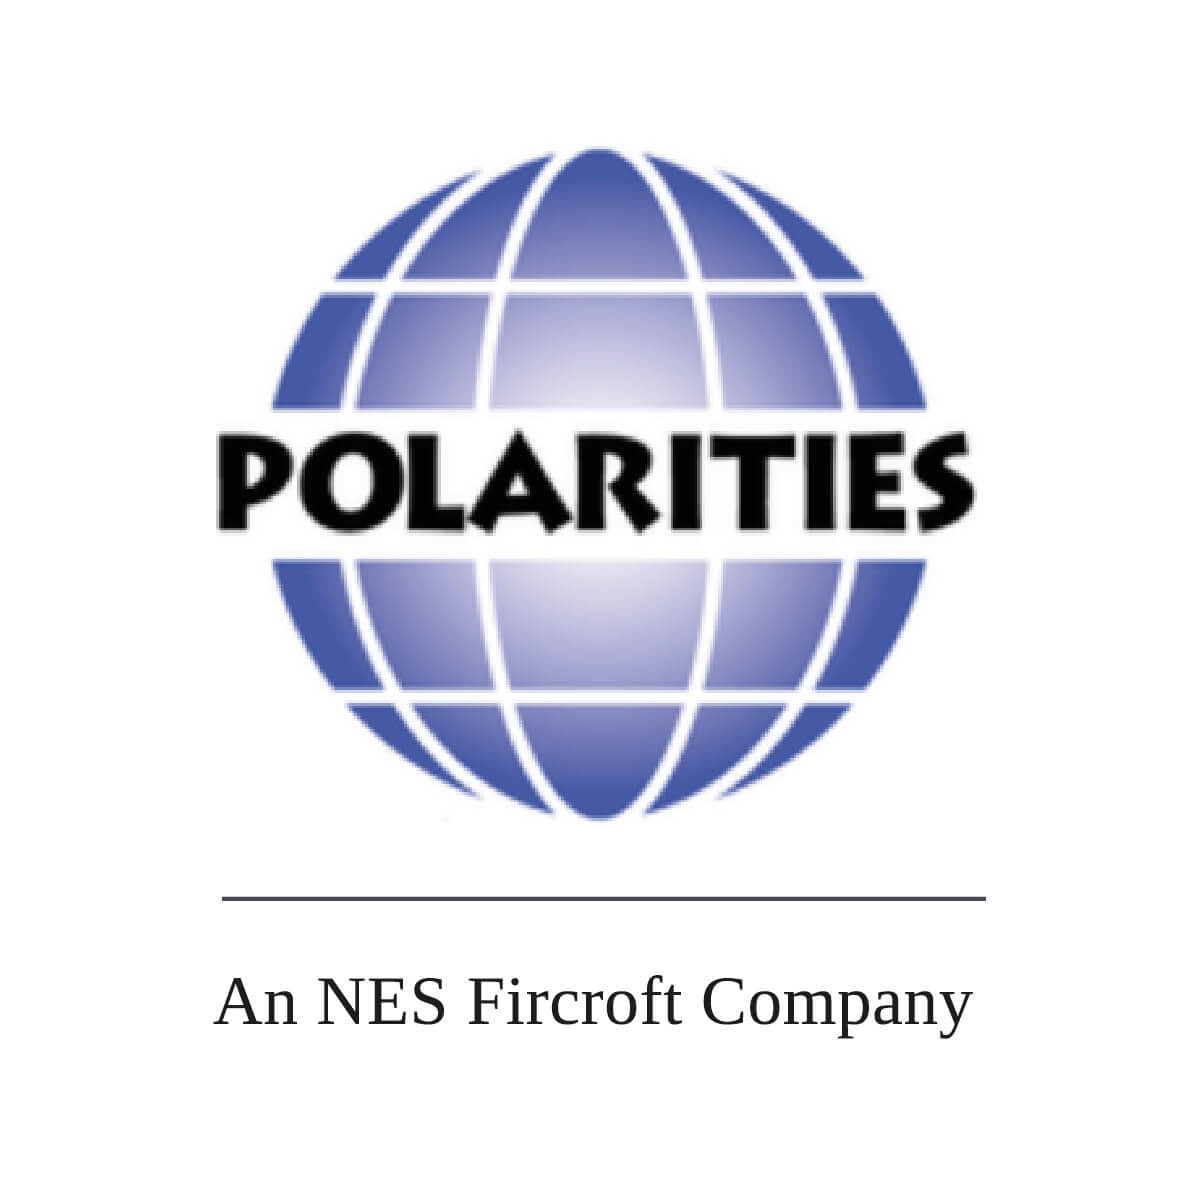 Polarities and NES Fircroft company